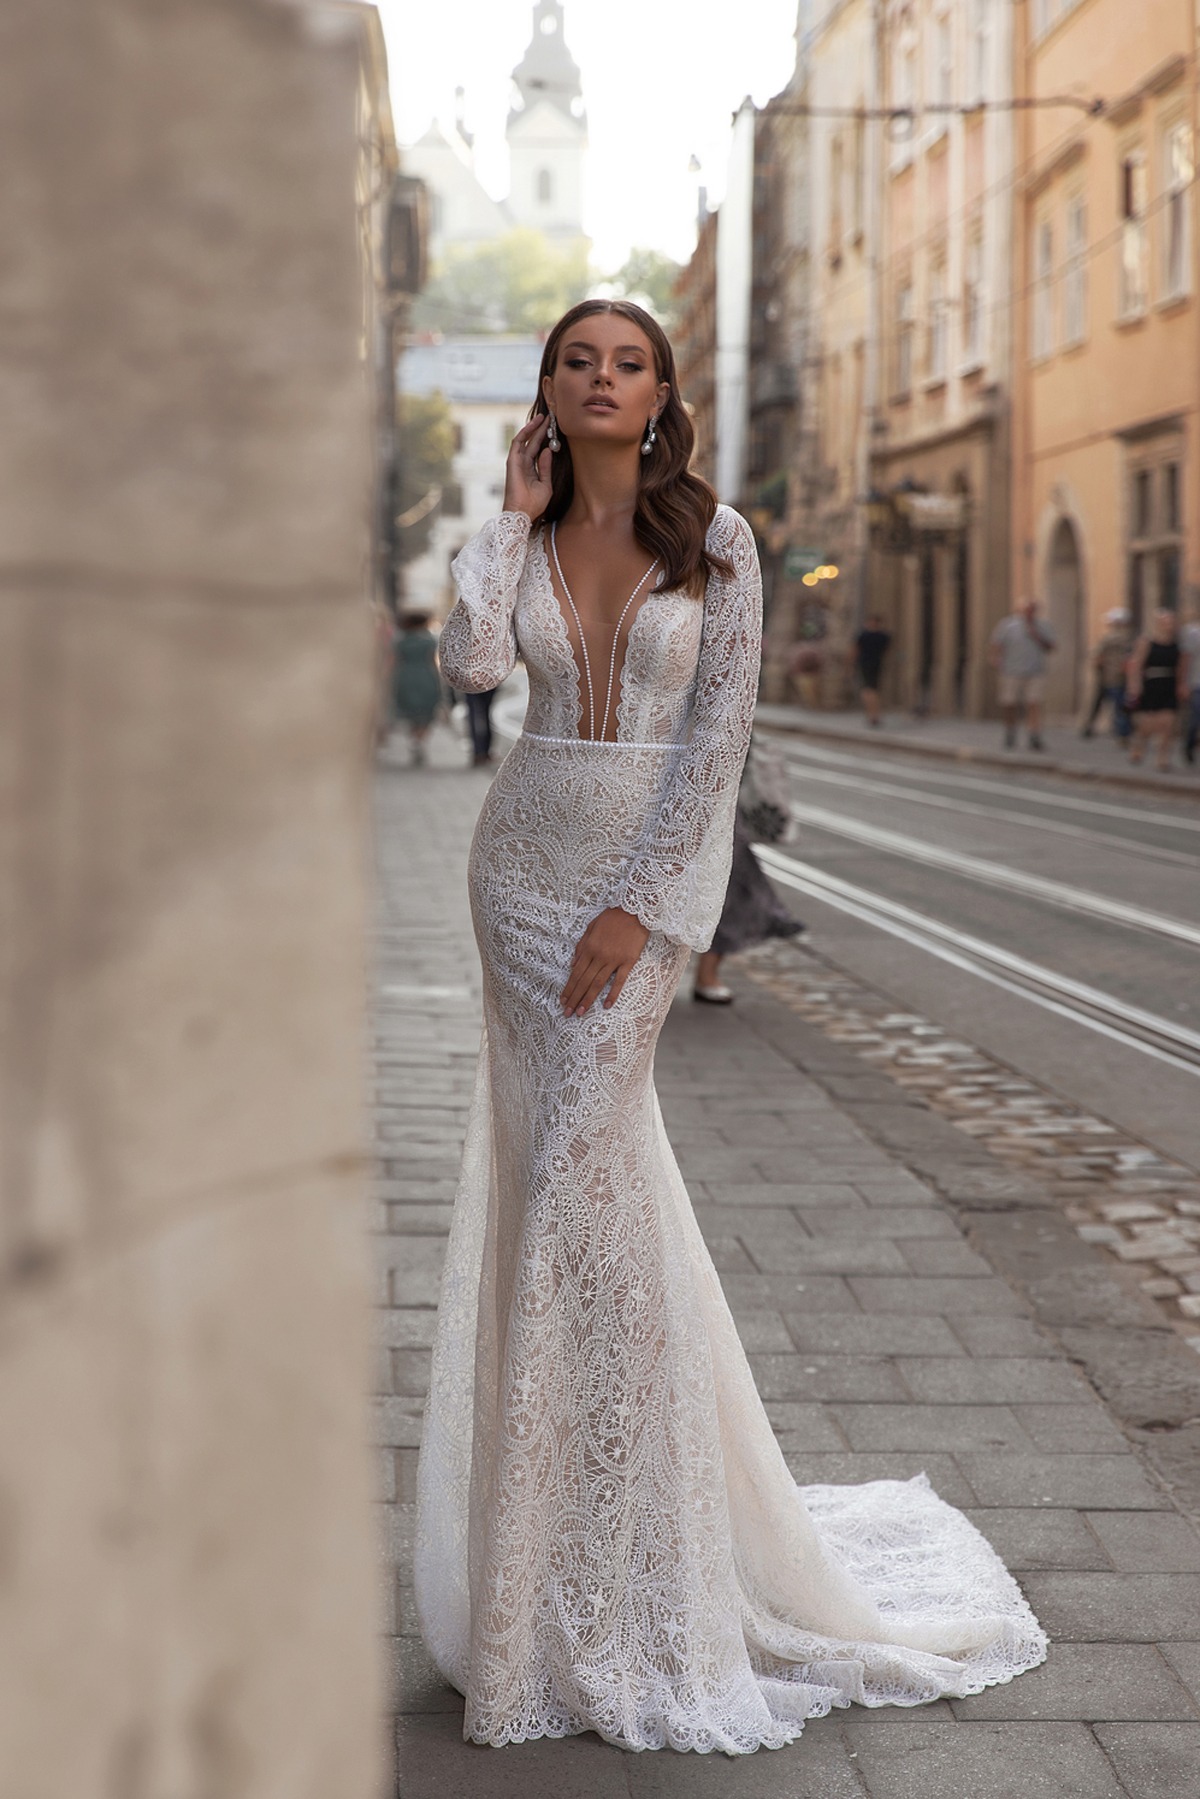 Diamond Bridal Gallery Introducing Valeri Gross Romantic and Feminine Wedding Dress Designer